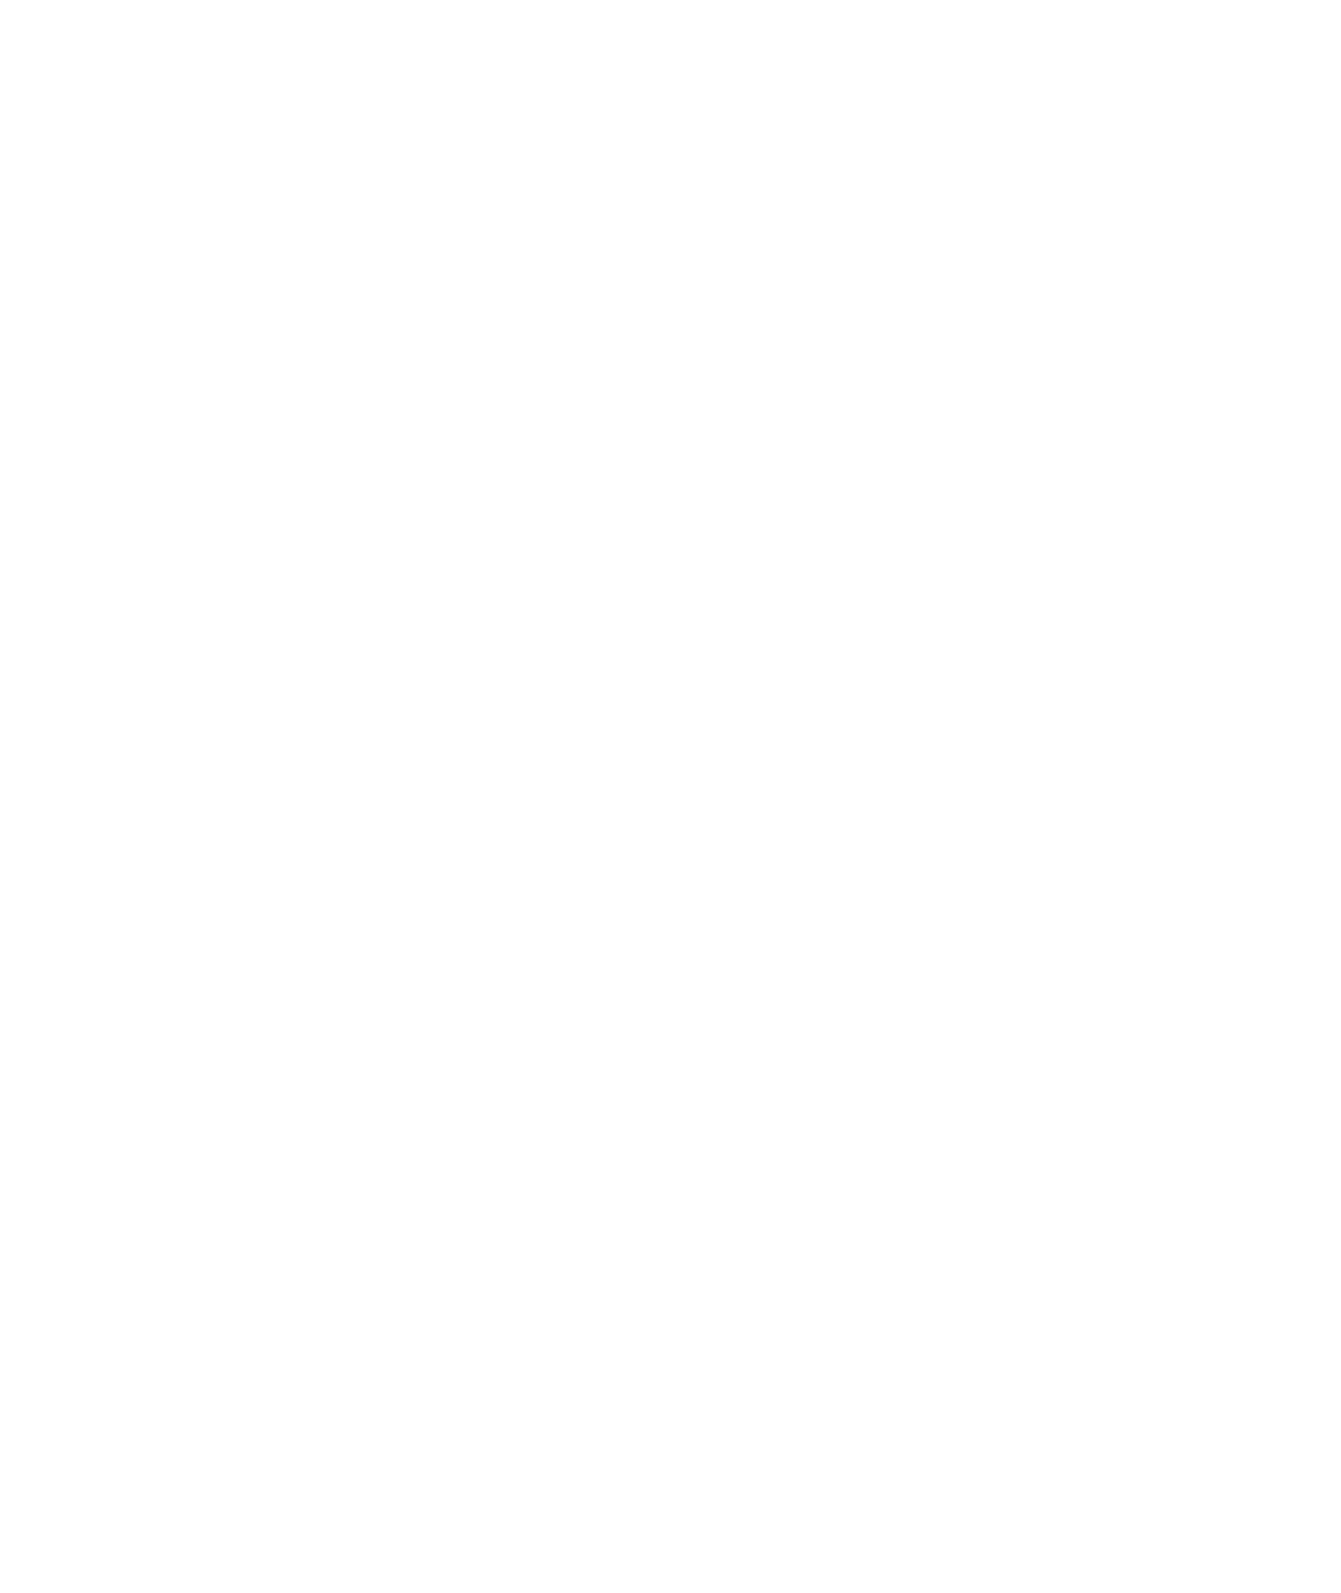 Bumrungrad Hospital logo pour fonds sombres (PNG transparent)